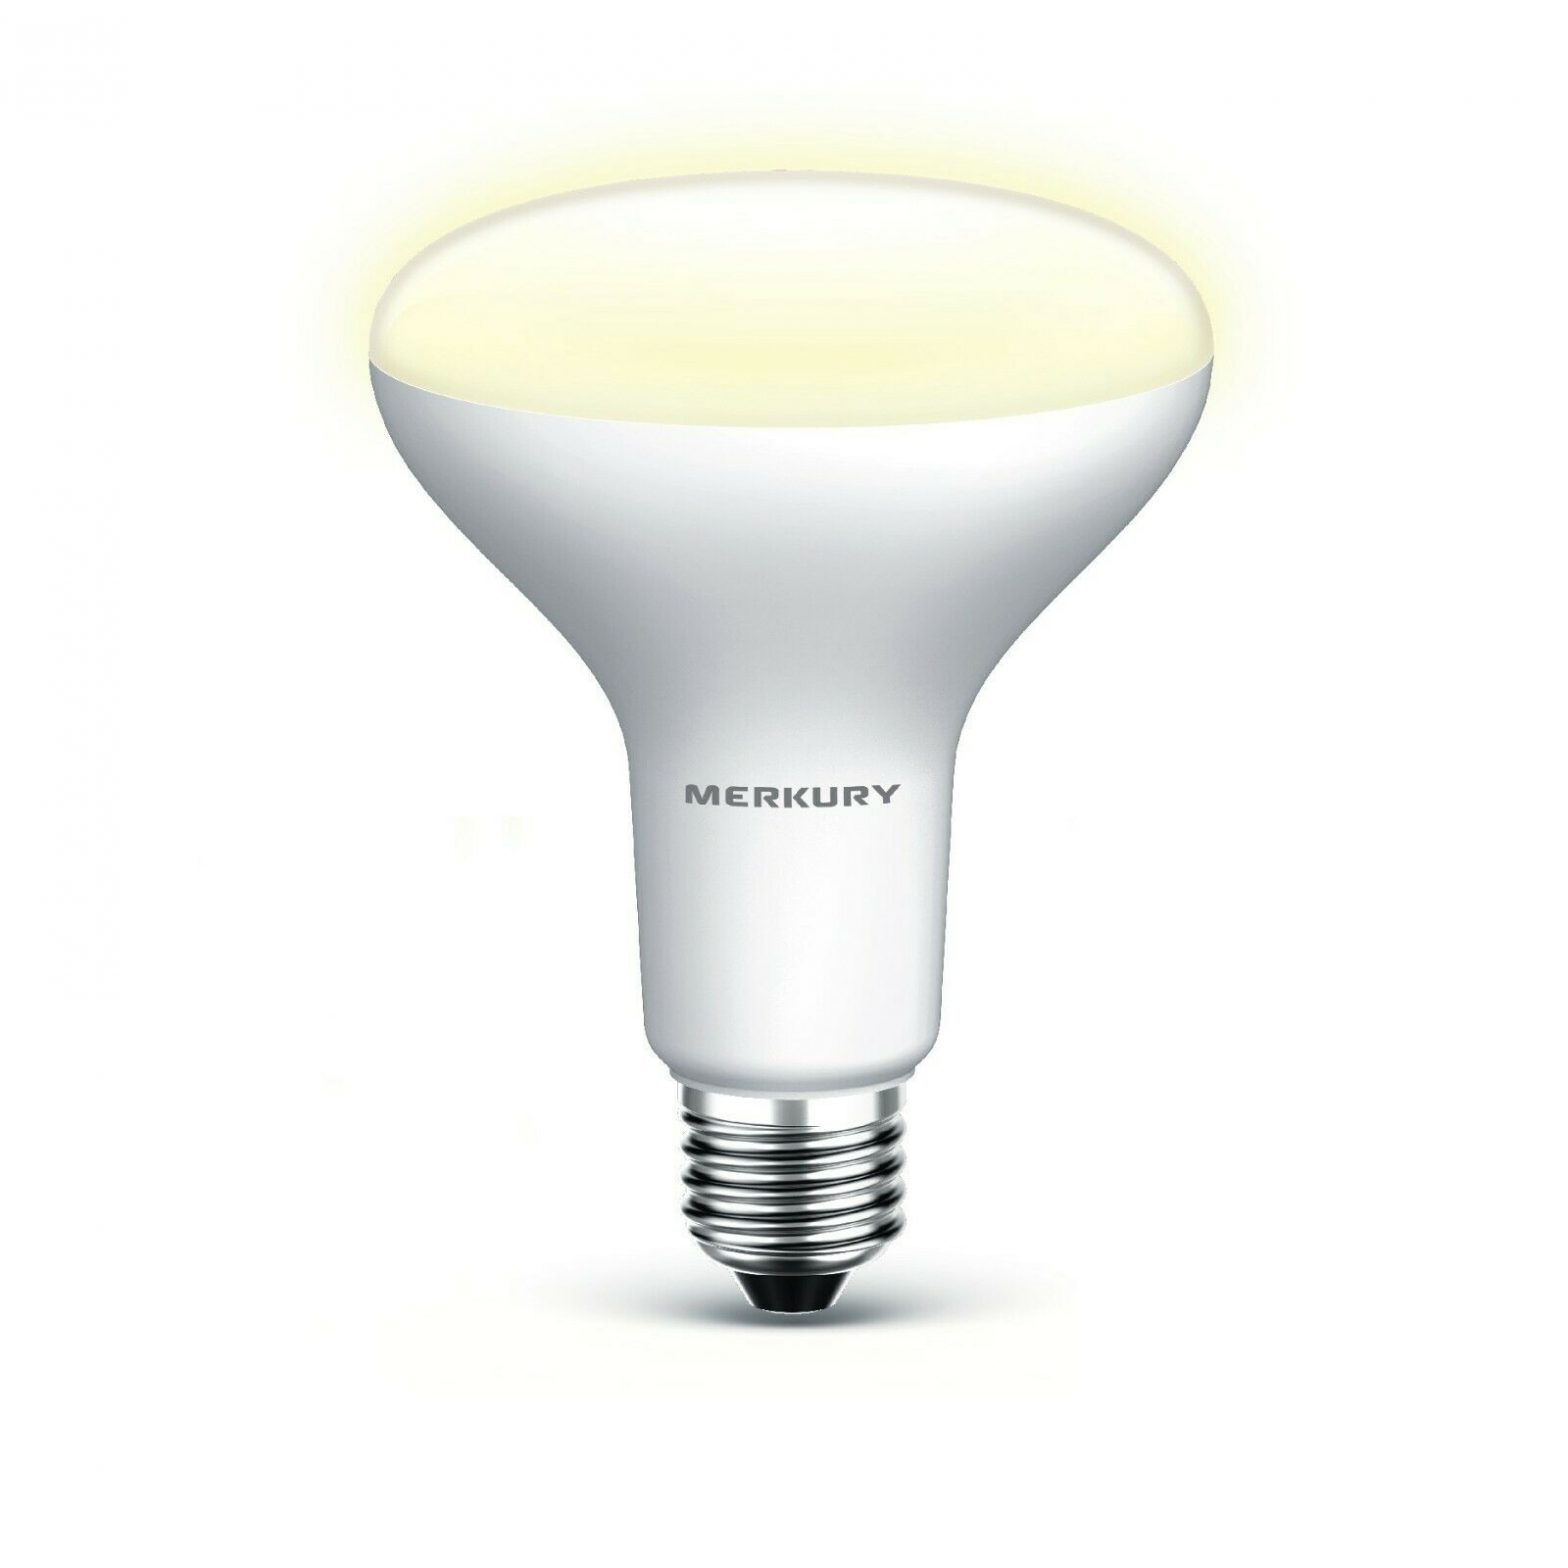 Merkury MI-BW906 Bright Spot Smart BR30 Wi-Fi LED Multicolor Light for User Manual